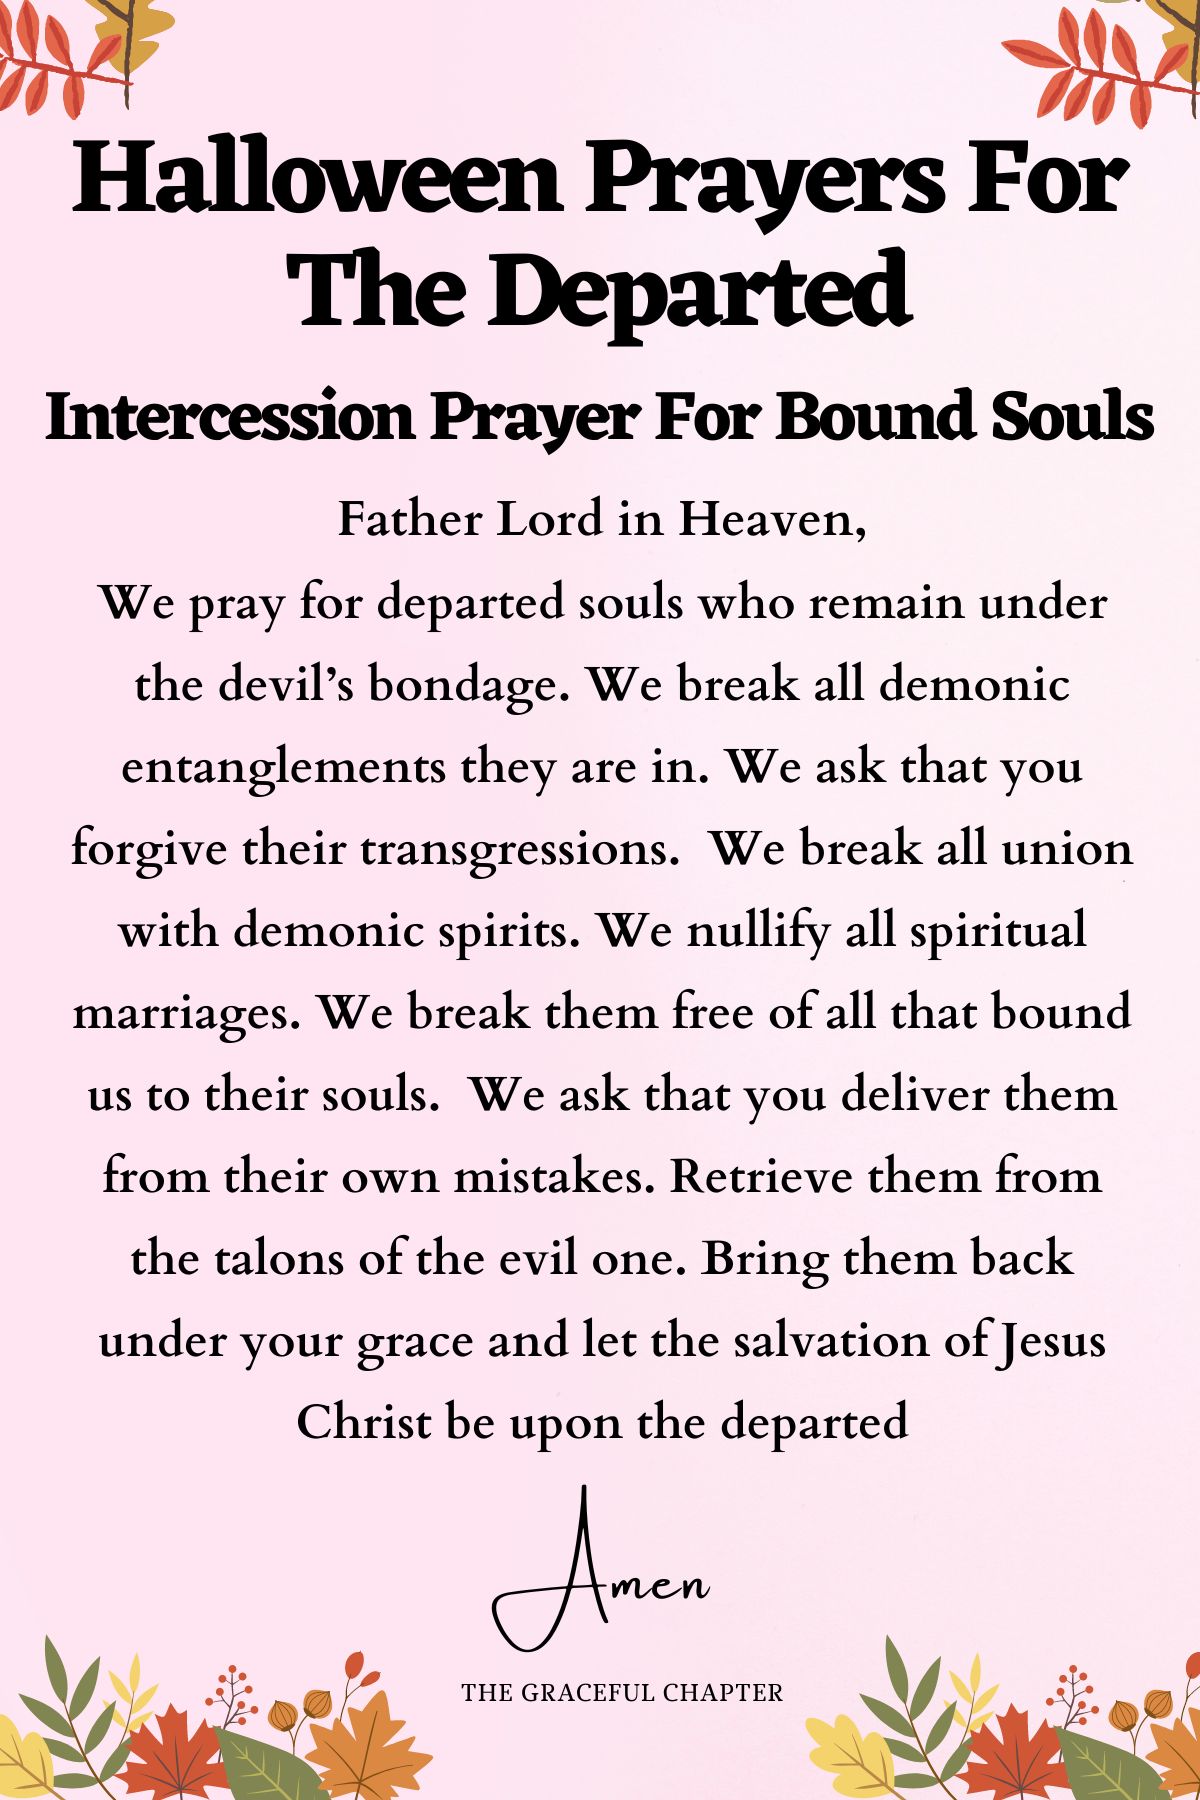 Intercession prayer for bound souls